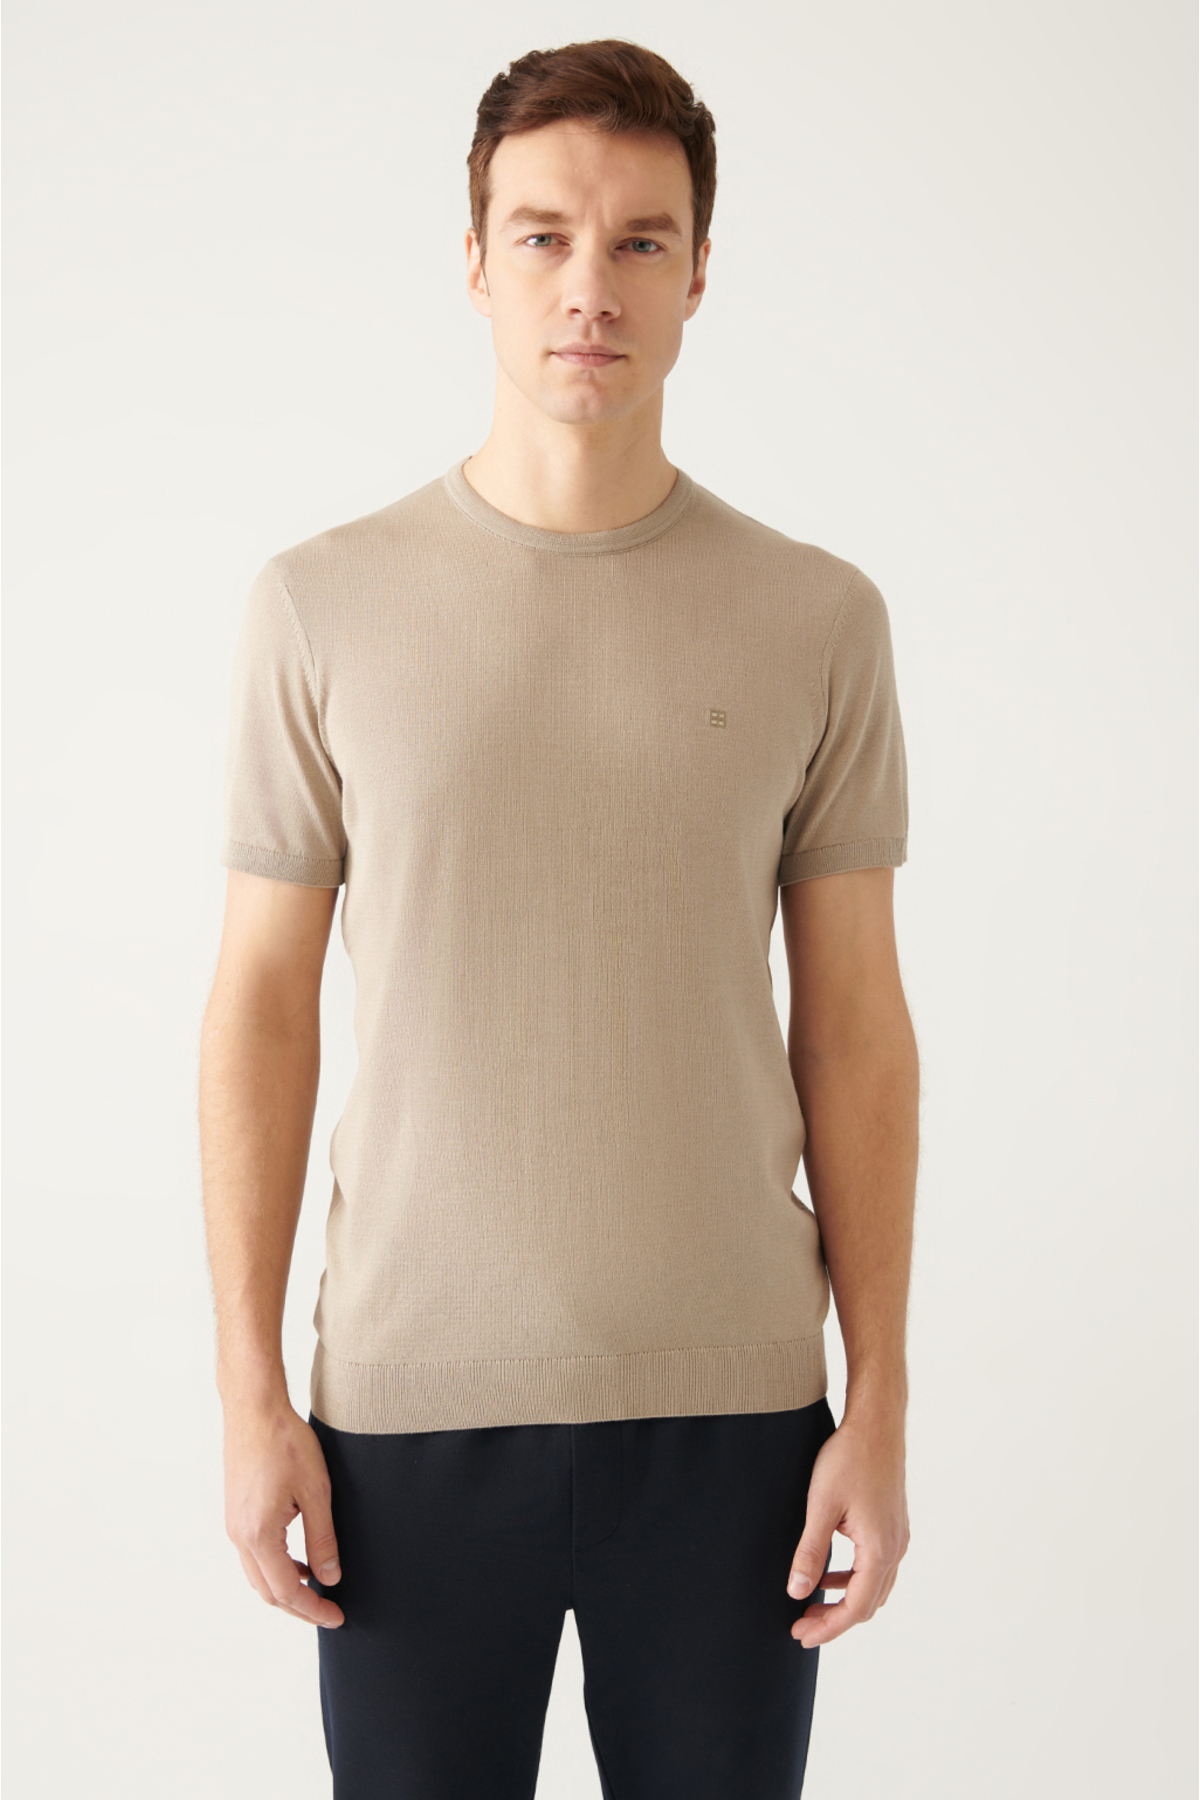 Avva Men's Mink Crew Neck Standard Fit Regular Cut Ribbed Knitwear T-shirt